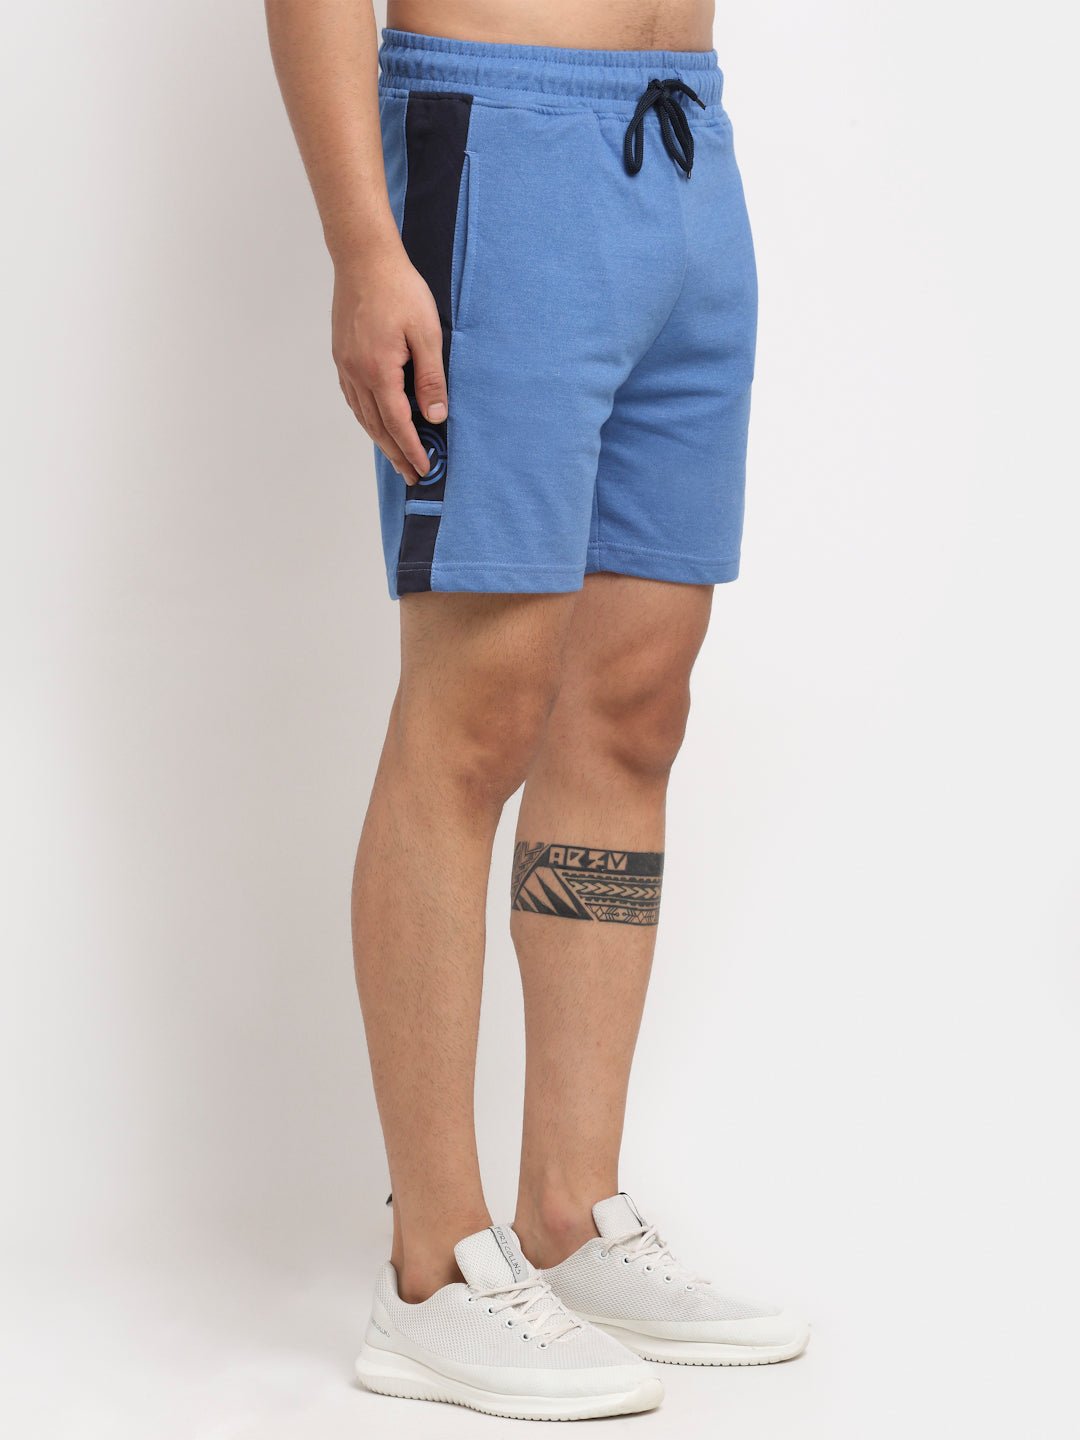 Blue Shorts - clubyork